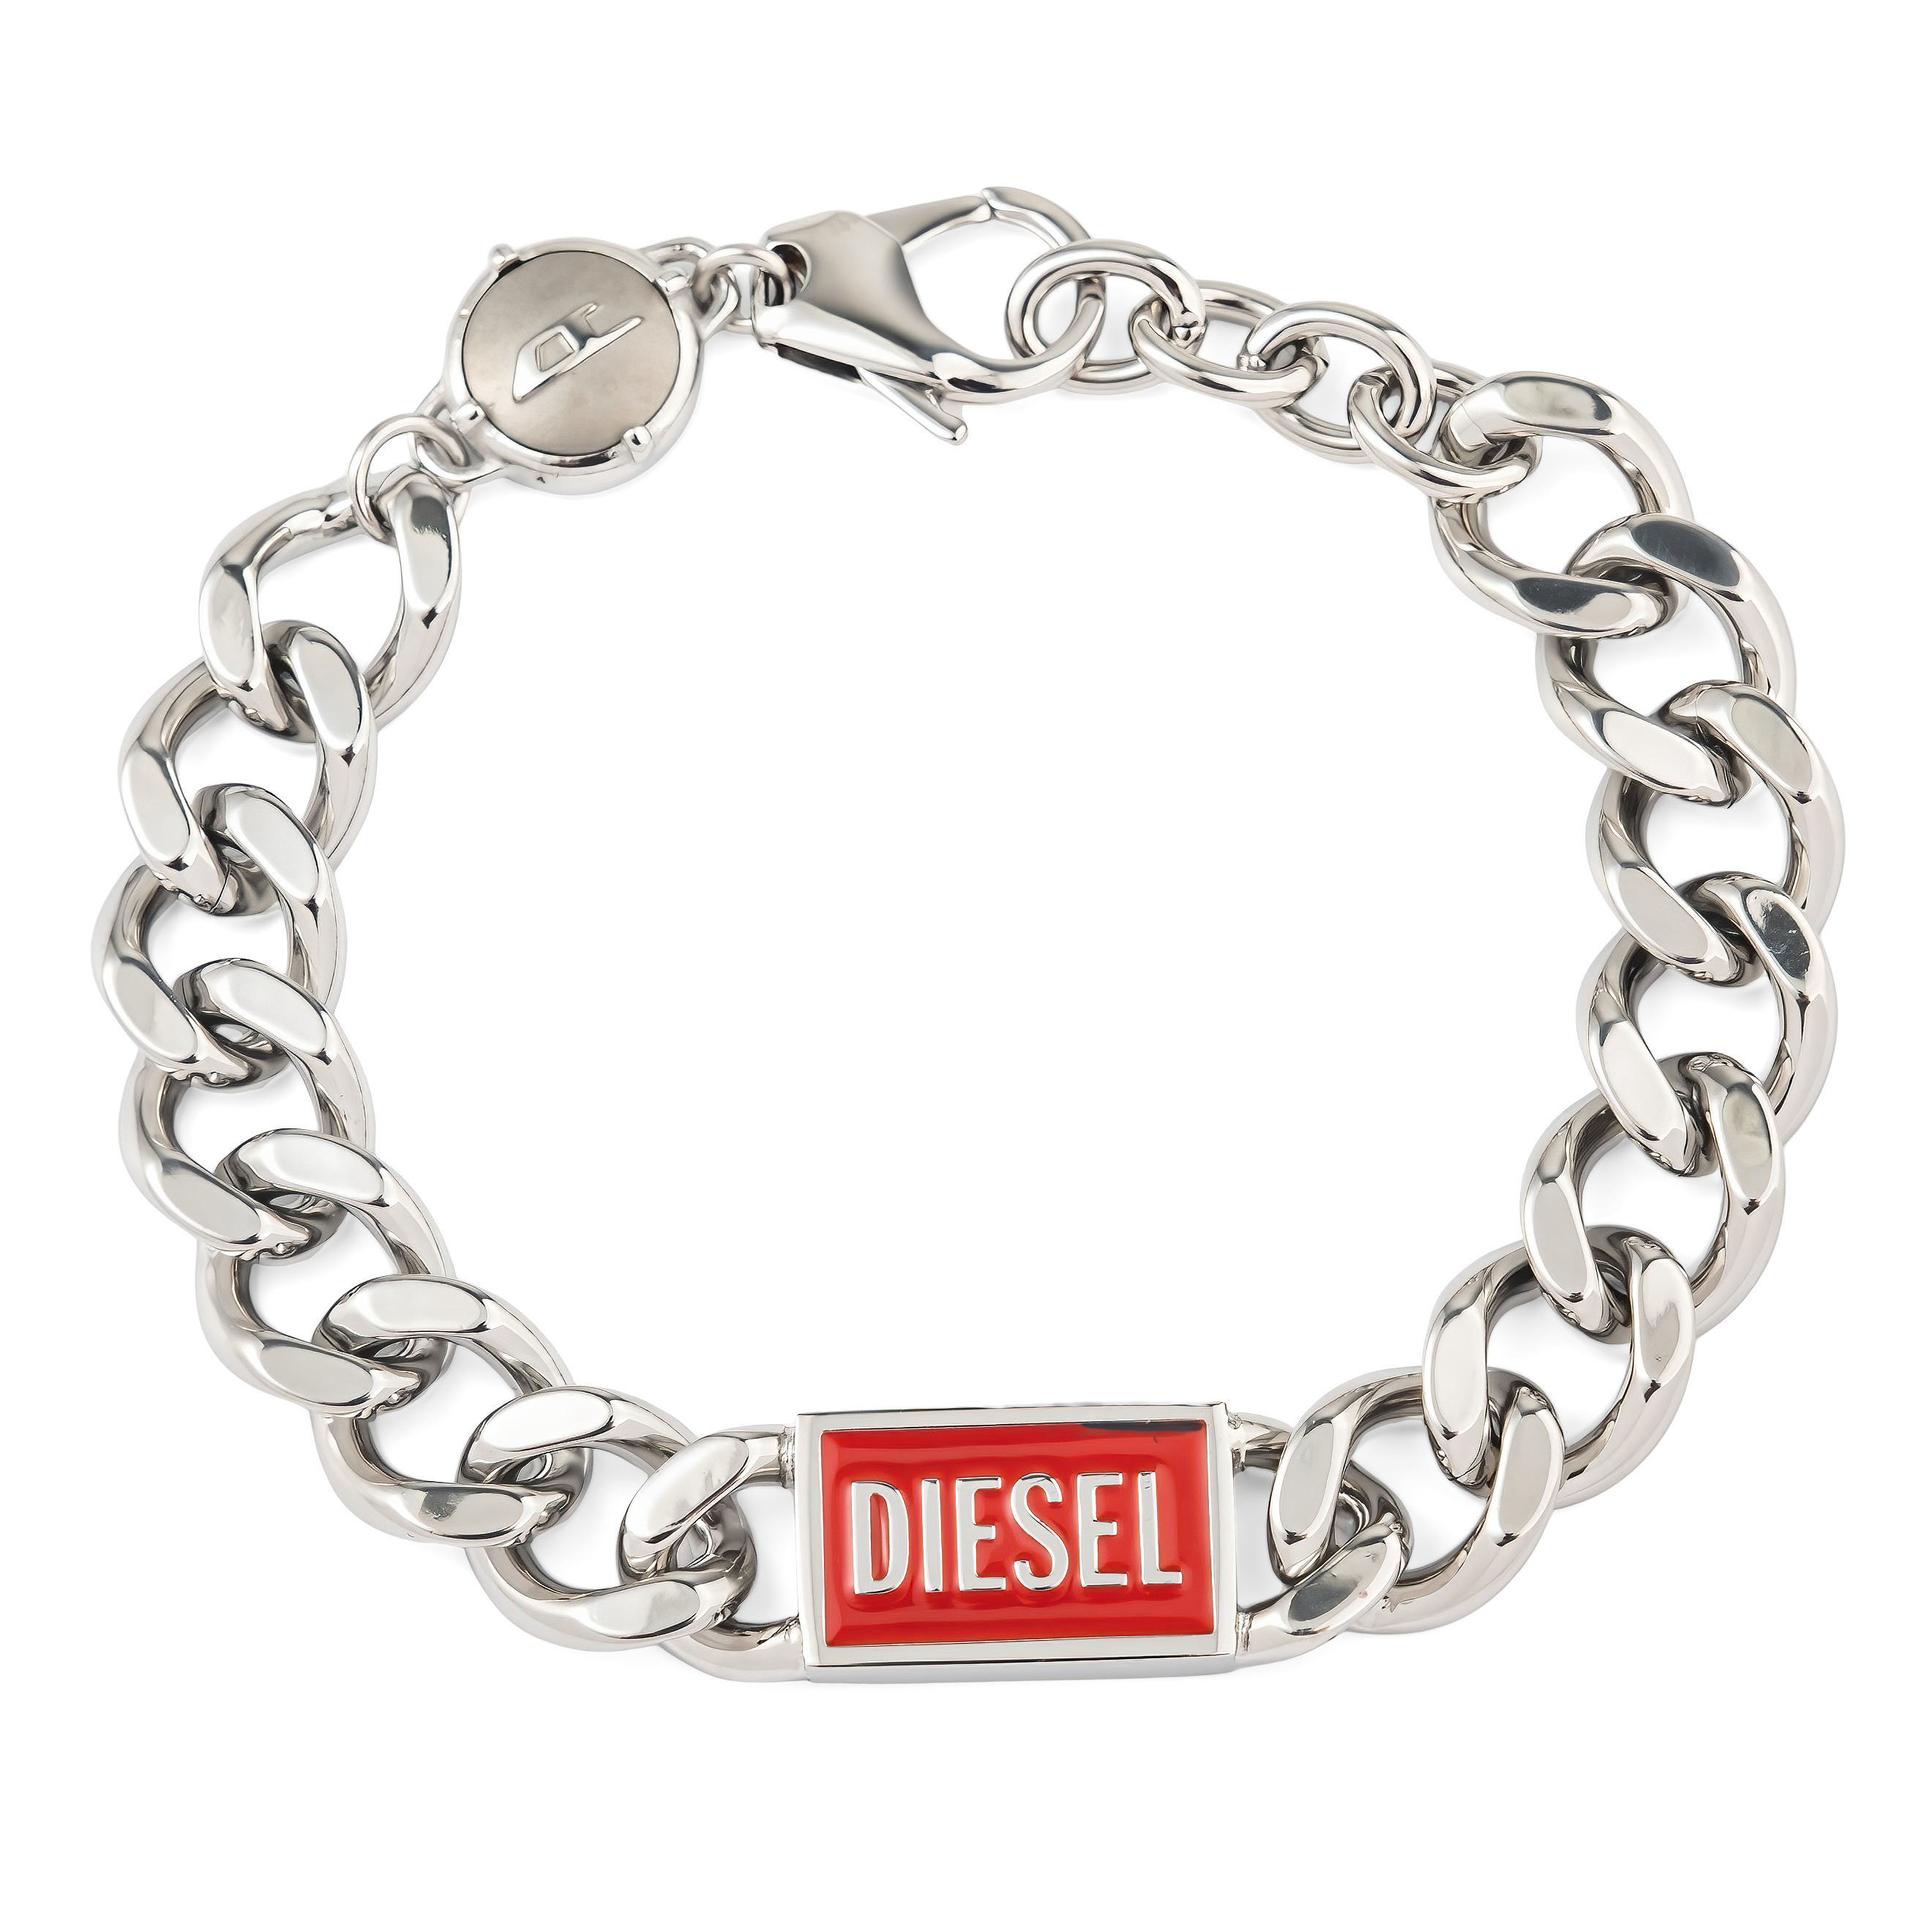 SKU buy store, Diesel – Poison at online Bracelet Chain Drop